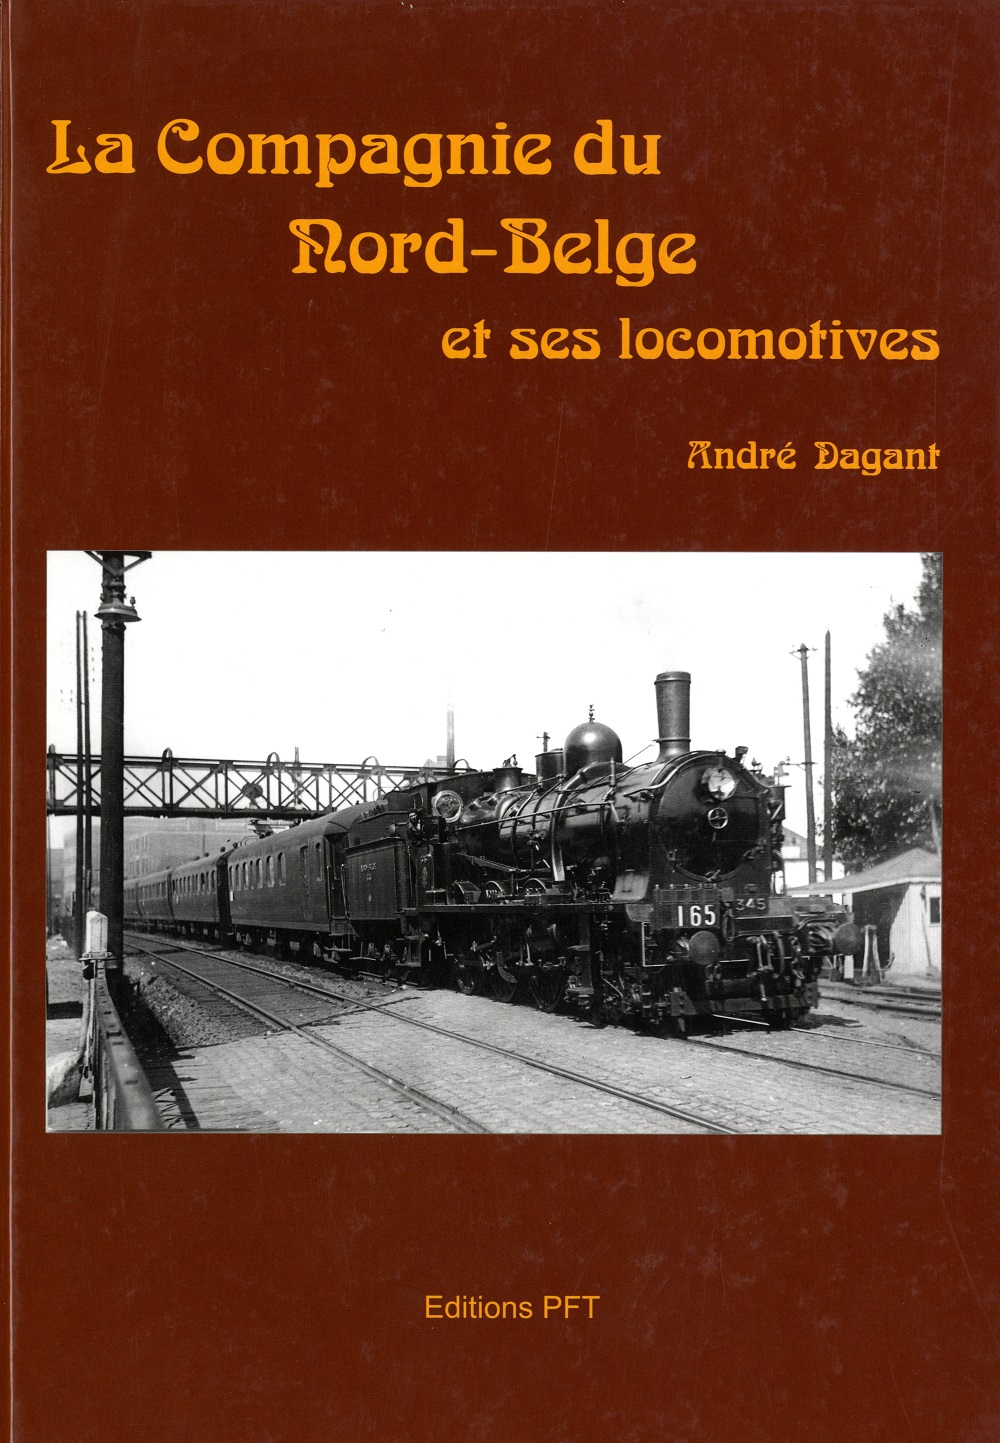 La Compagnie du Nord Belge et ses locomotives